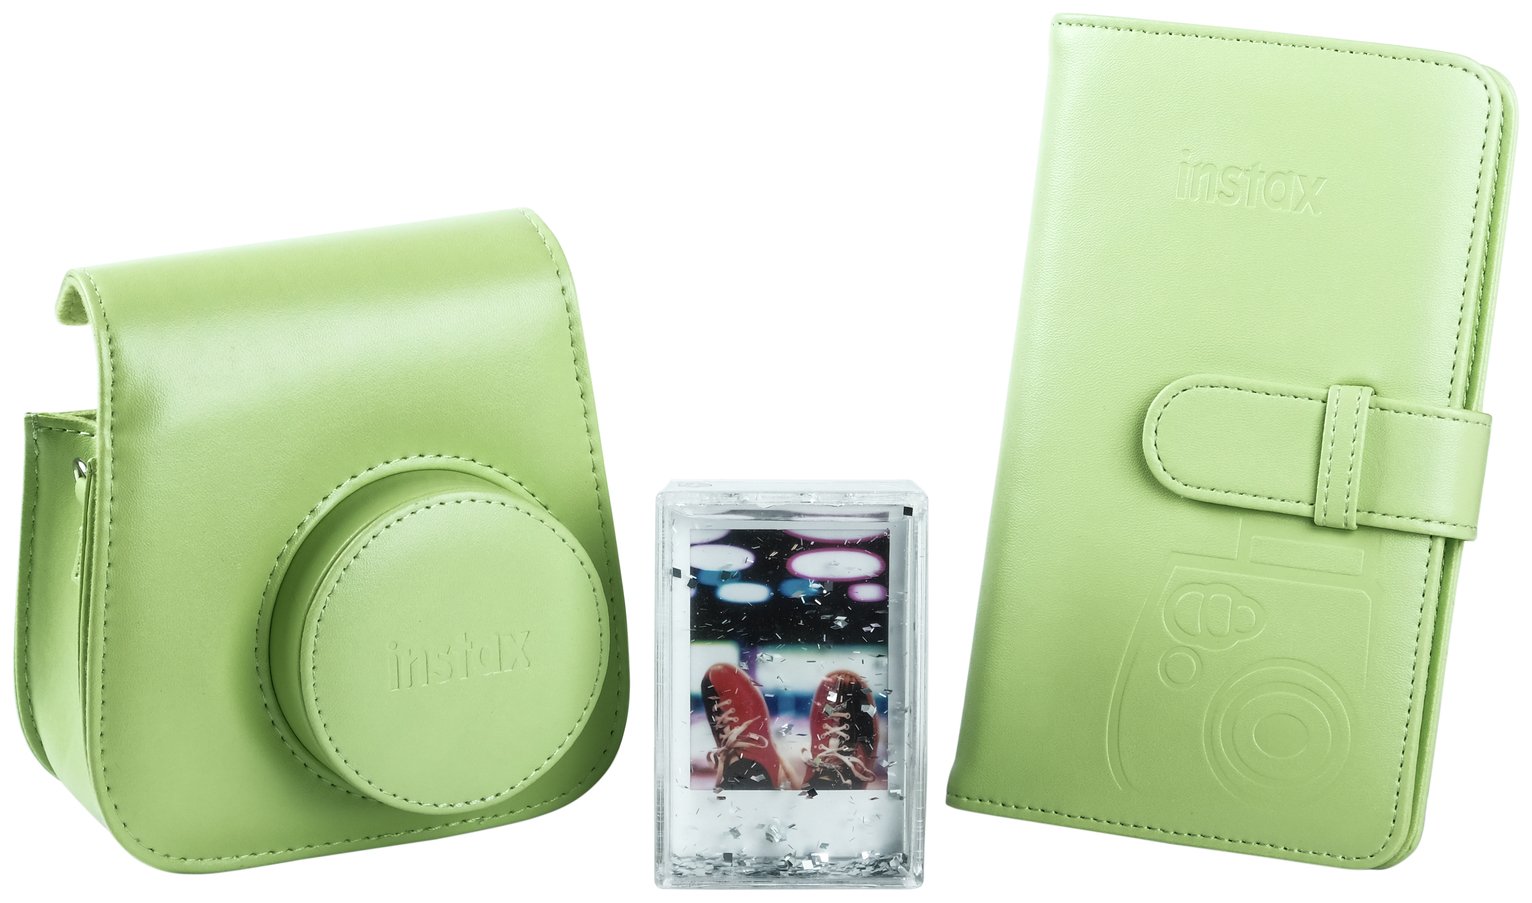 Instax Mini 9 Accessory Kit - Lime Green